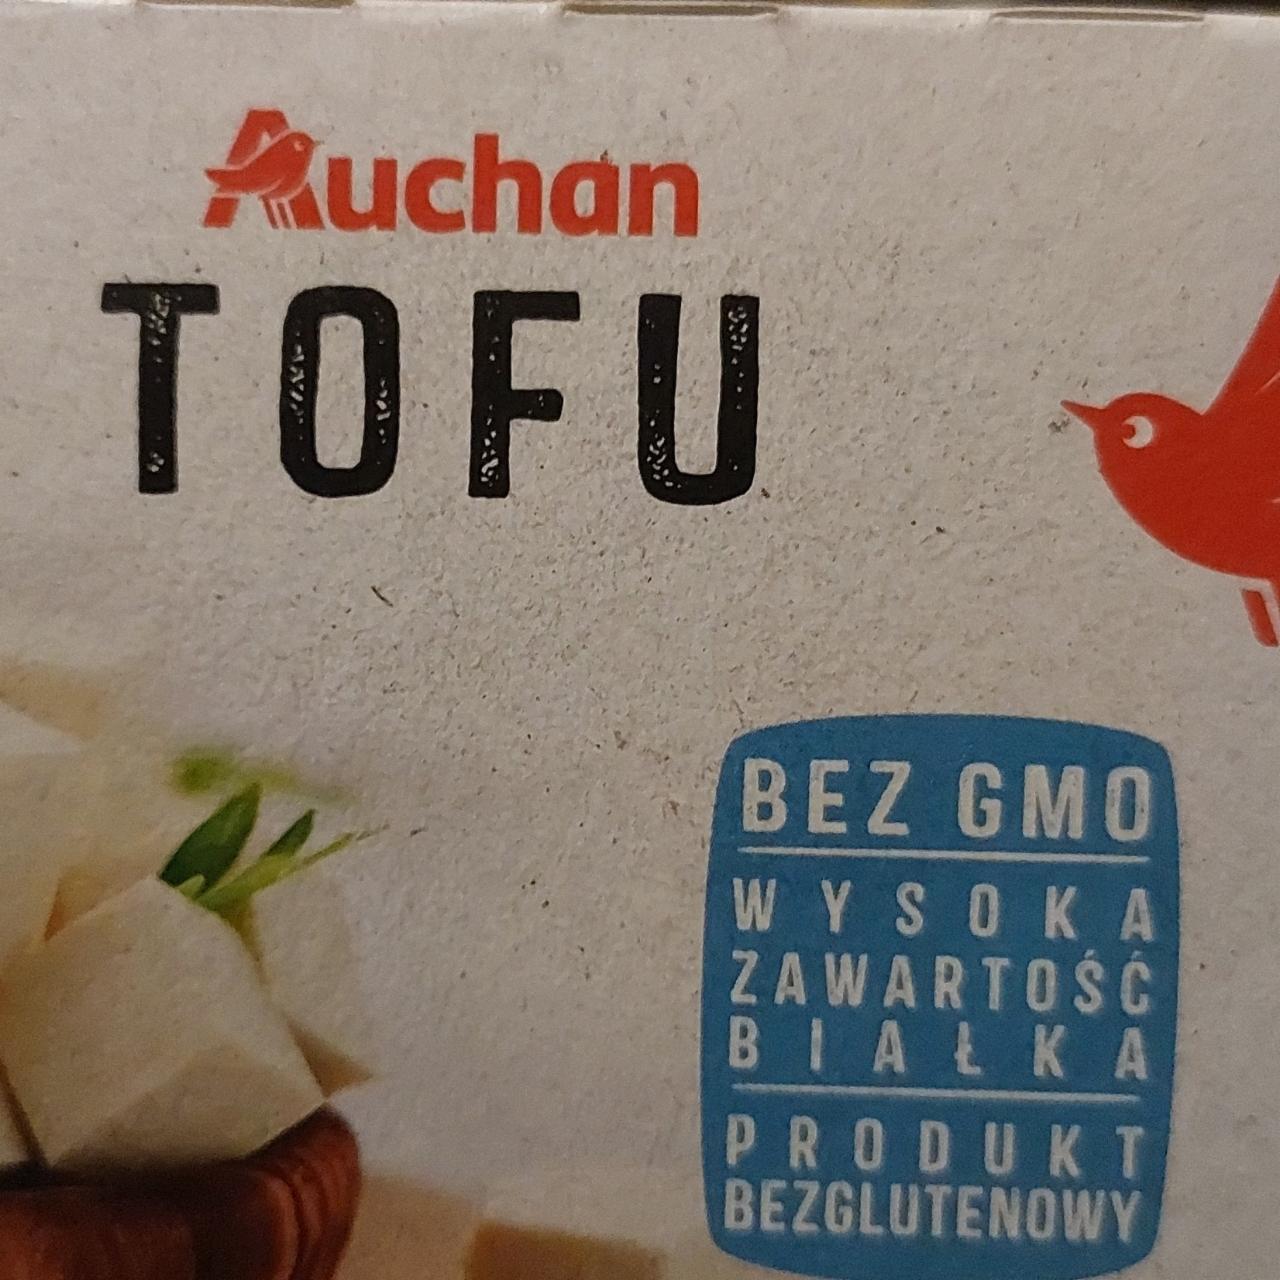 Zdjęcia - Tofu Auchan